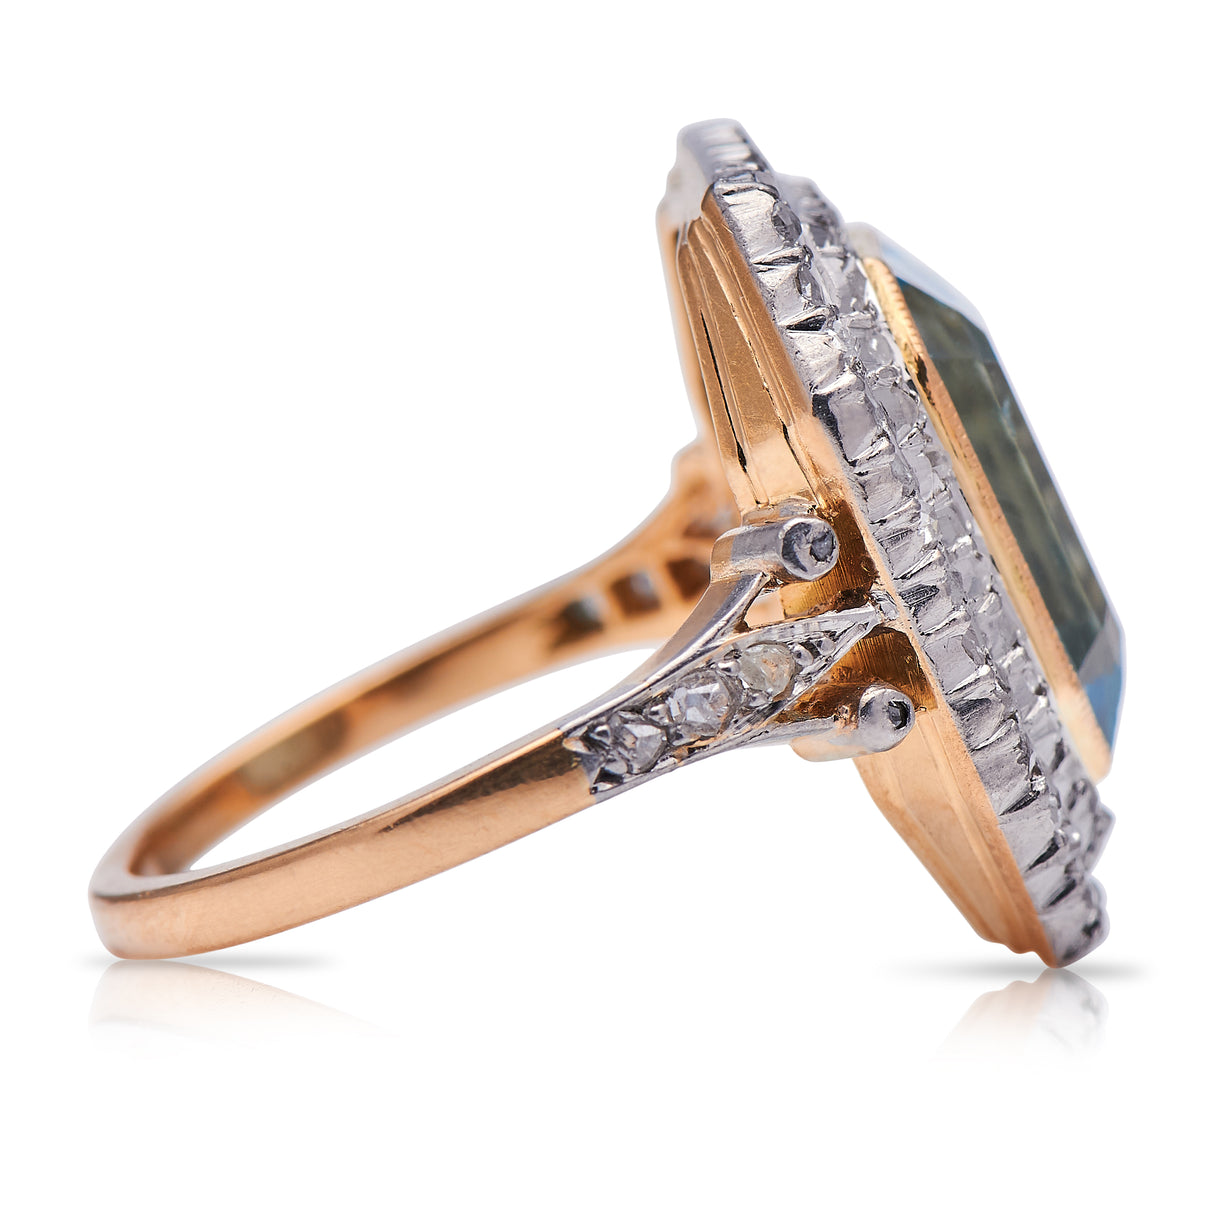 Antique Engagement Rings | Antique Ring Boutique | Vintage Engagement Rings | Antique Engagement Rings | Antique Jewellery company | Vintage Jewellery  Belle Époque, French, Aquamarine and Diamond Ring